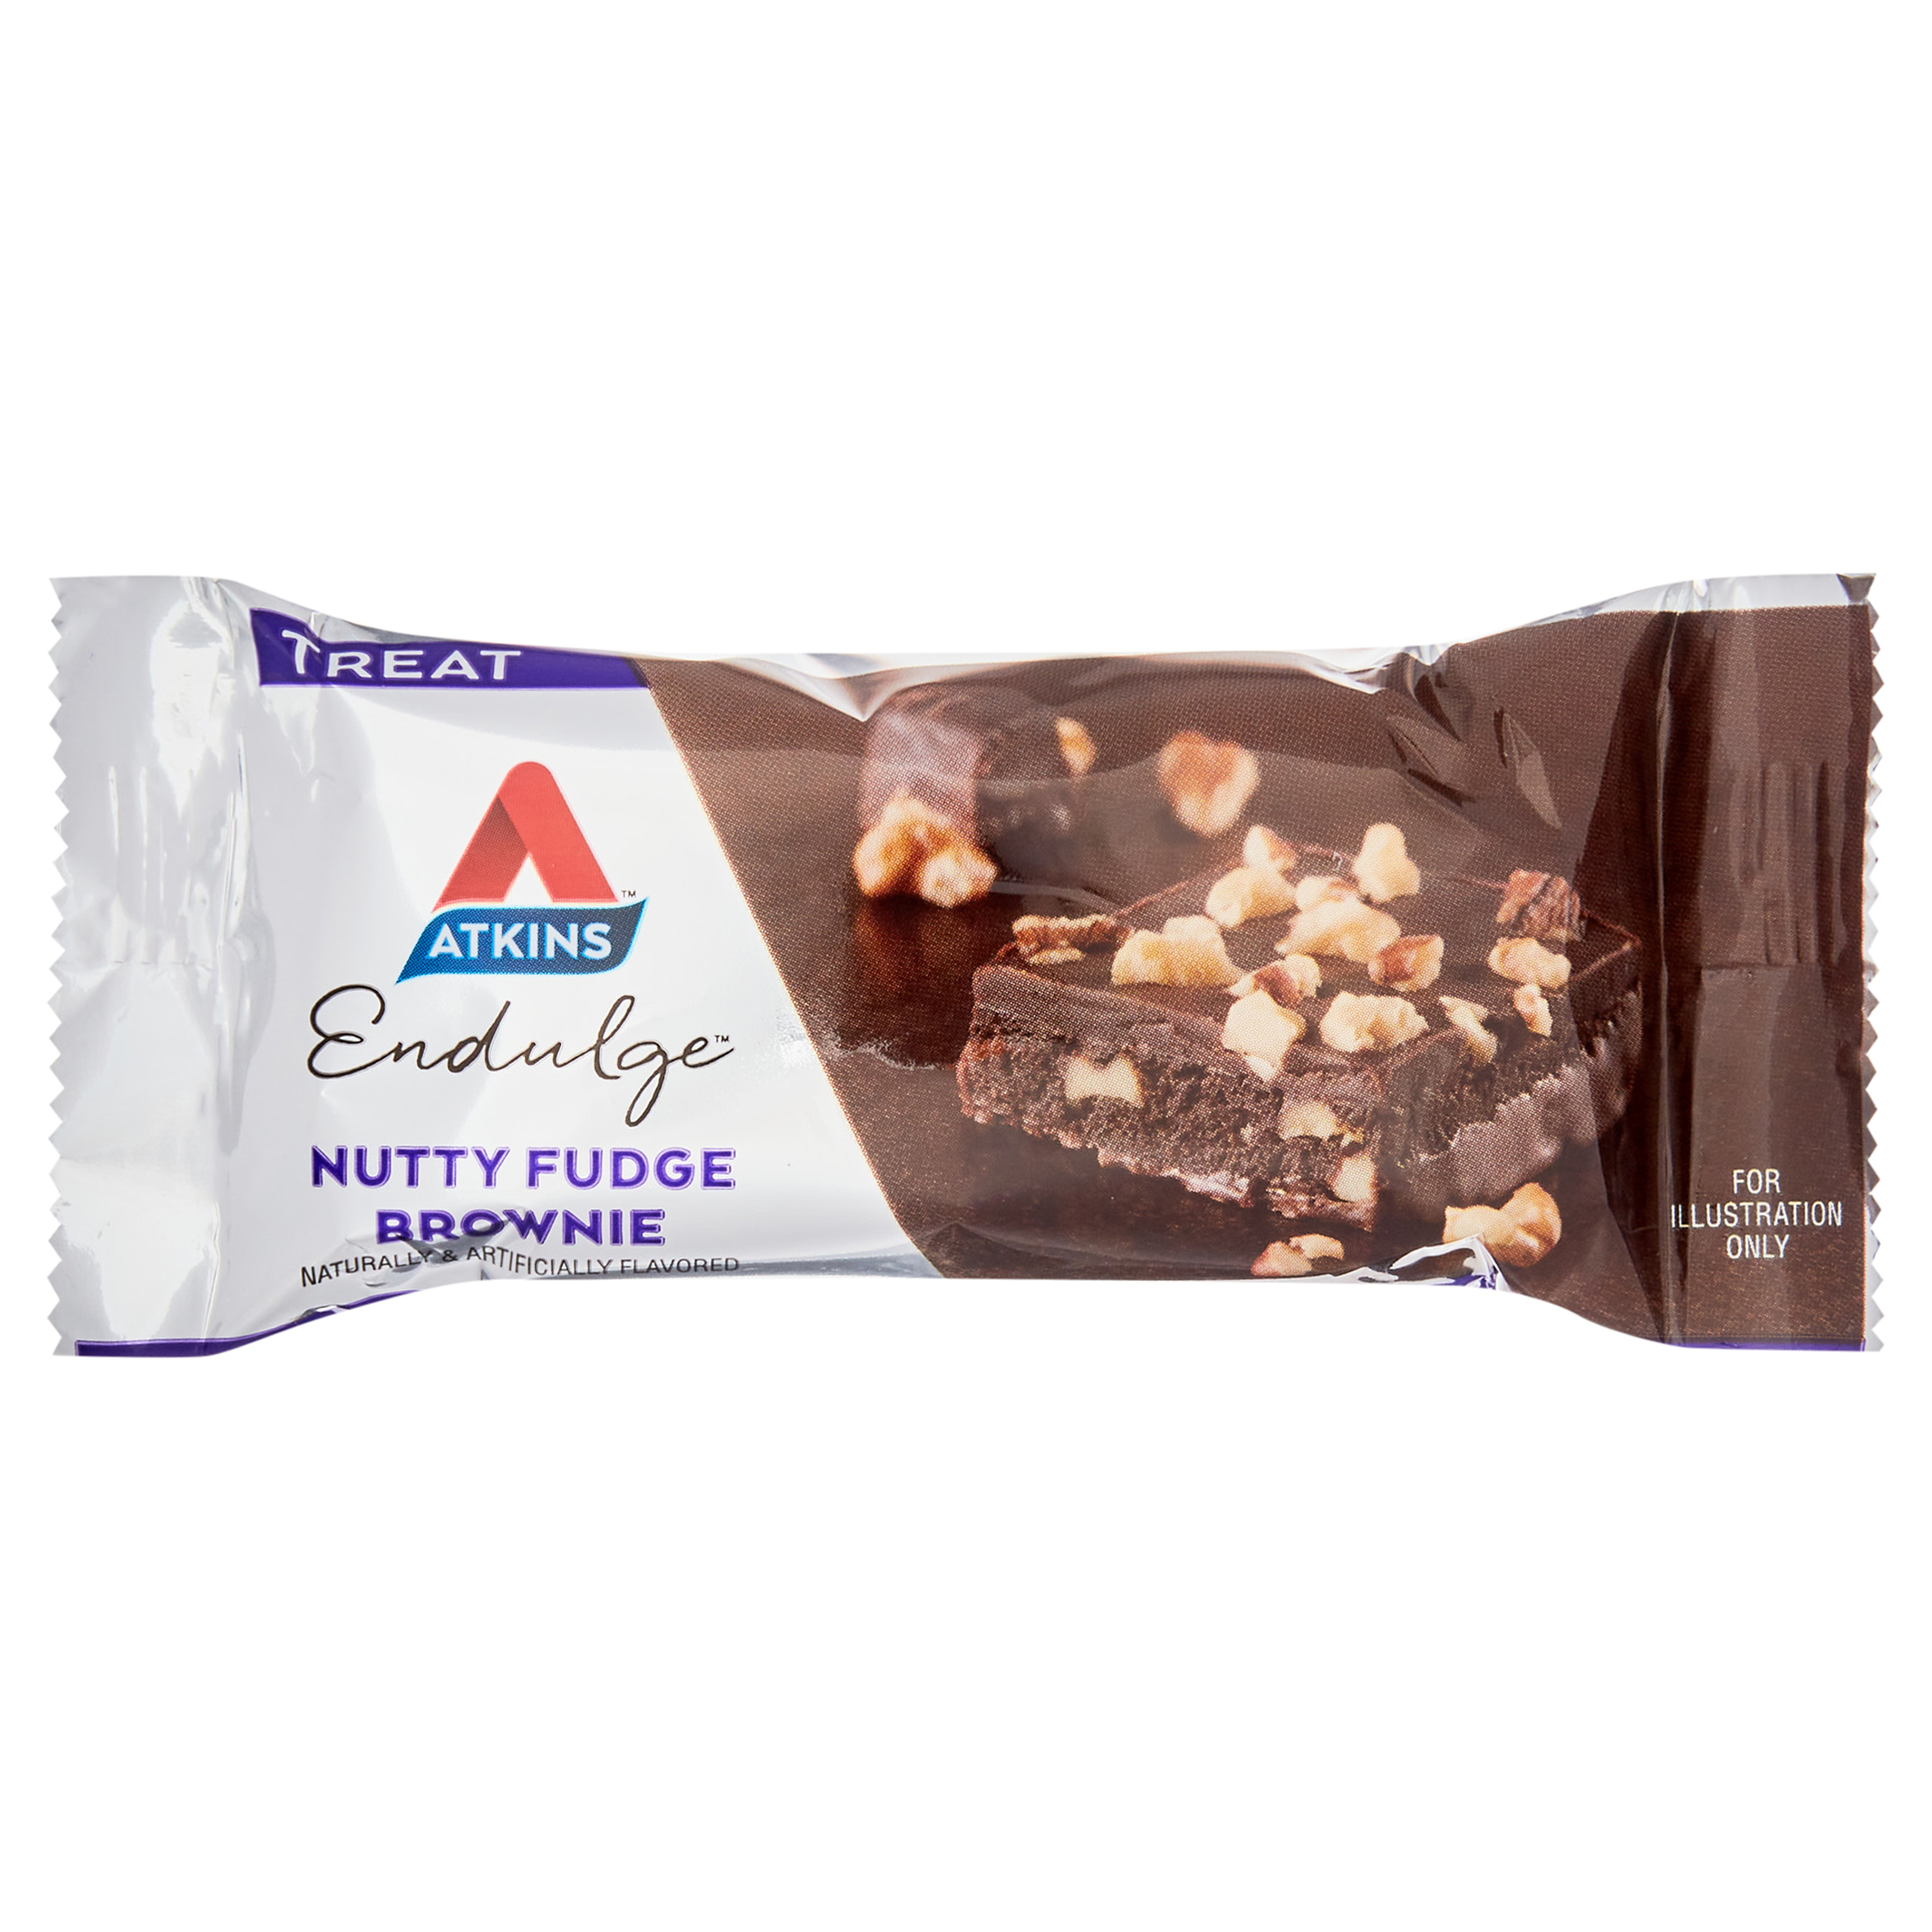 Atkins Endulge Nutty Fudge Brownie, Dessert Favorite, Good Source of Fiber, Low Sugar, 5 Ct - image 3 of 11